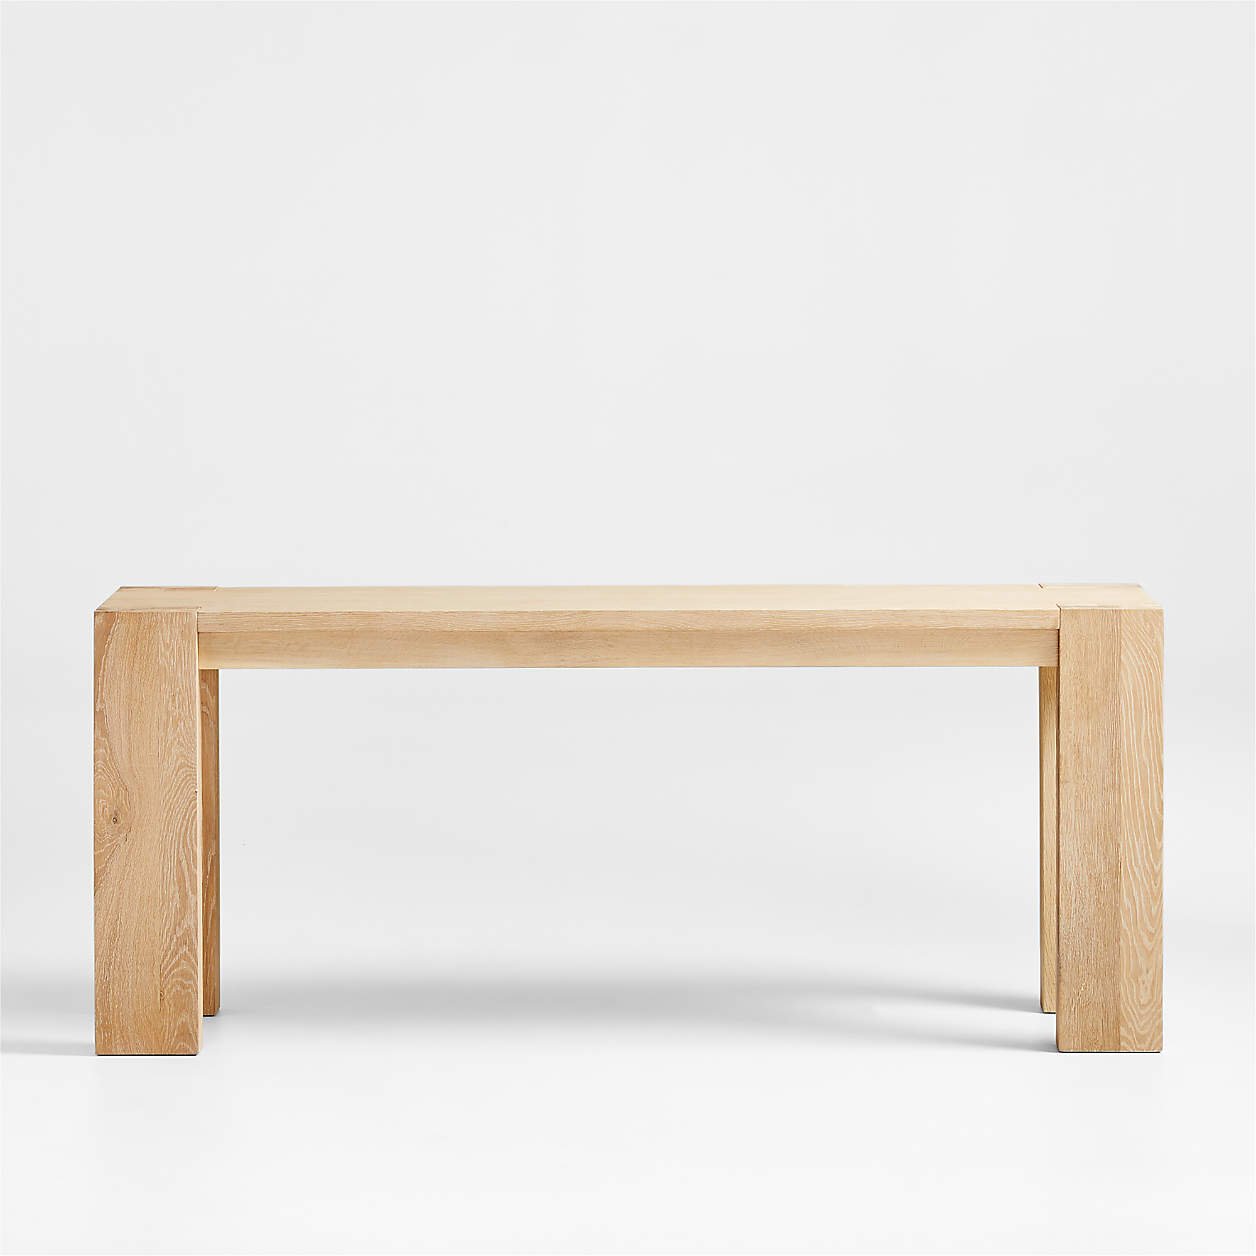 Terra 72" Natural White Oak Wood Console Table - $999 - Crate &amp; Barrel